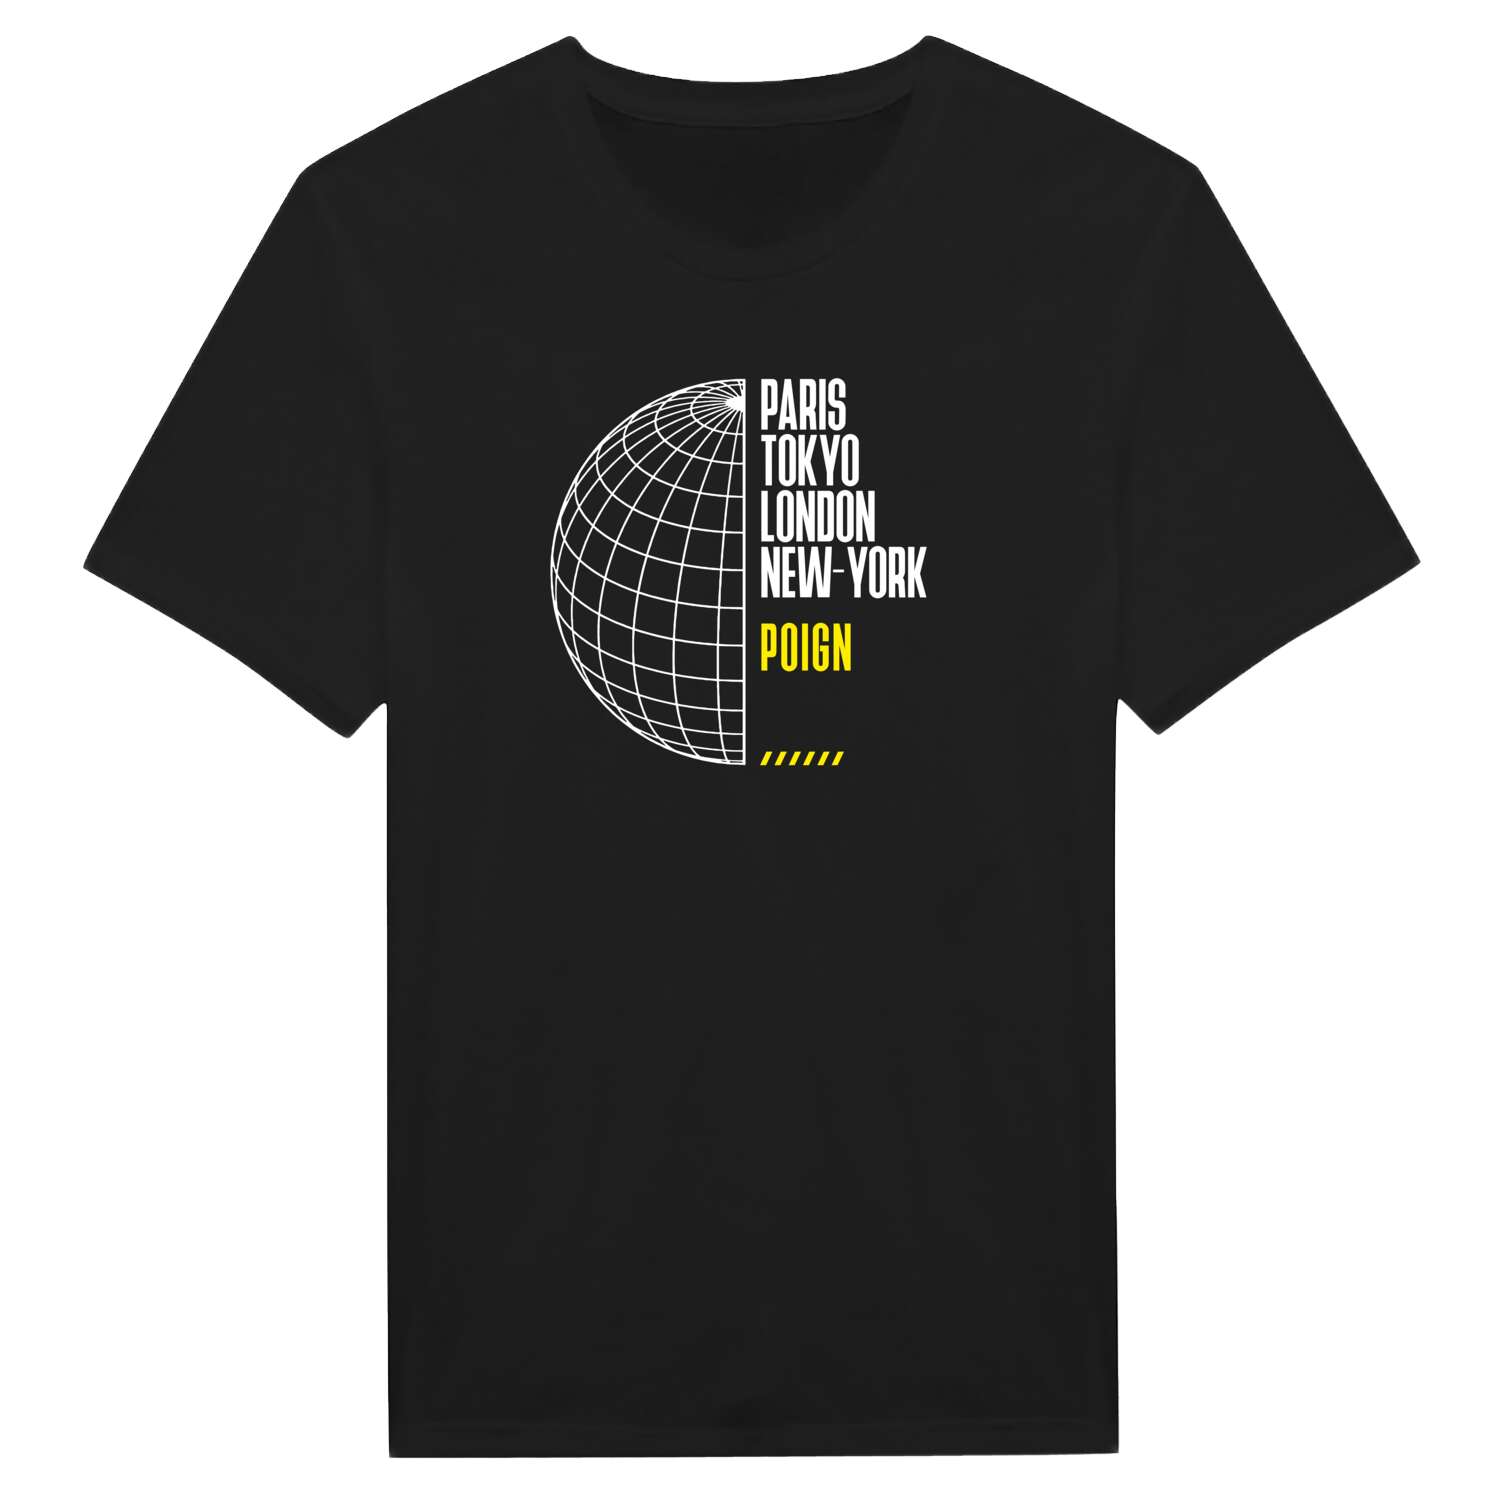 Poign T-Shirt »Paris Tokyo London«